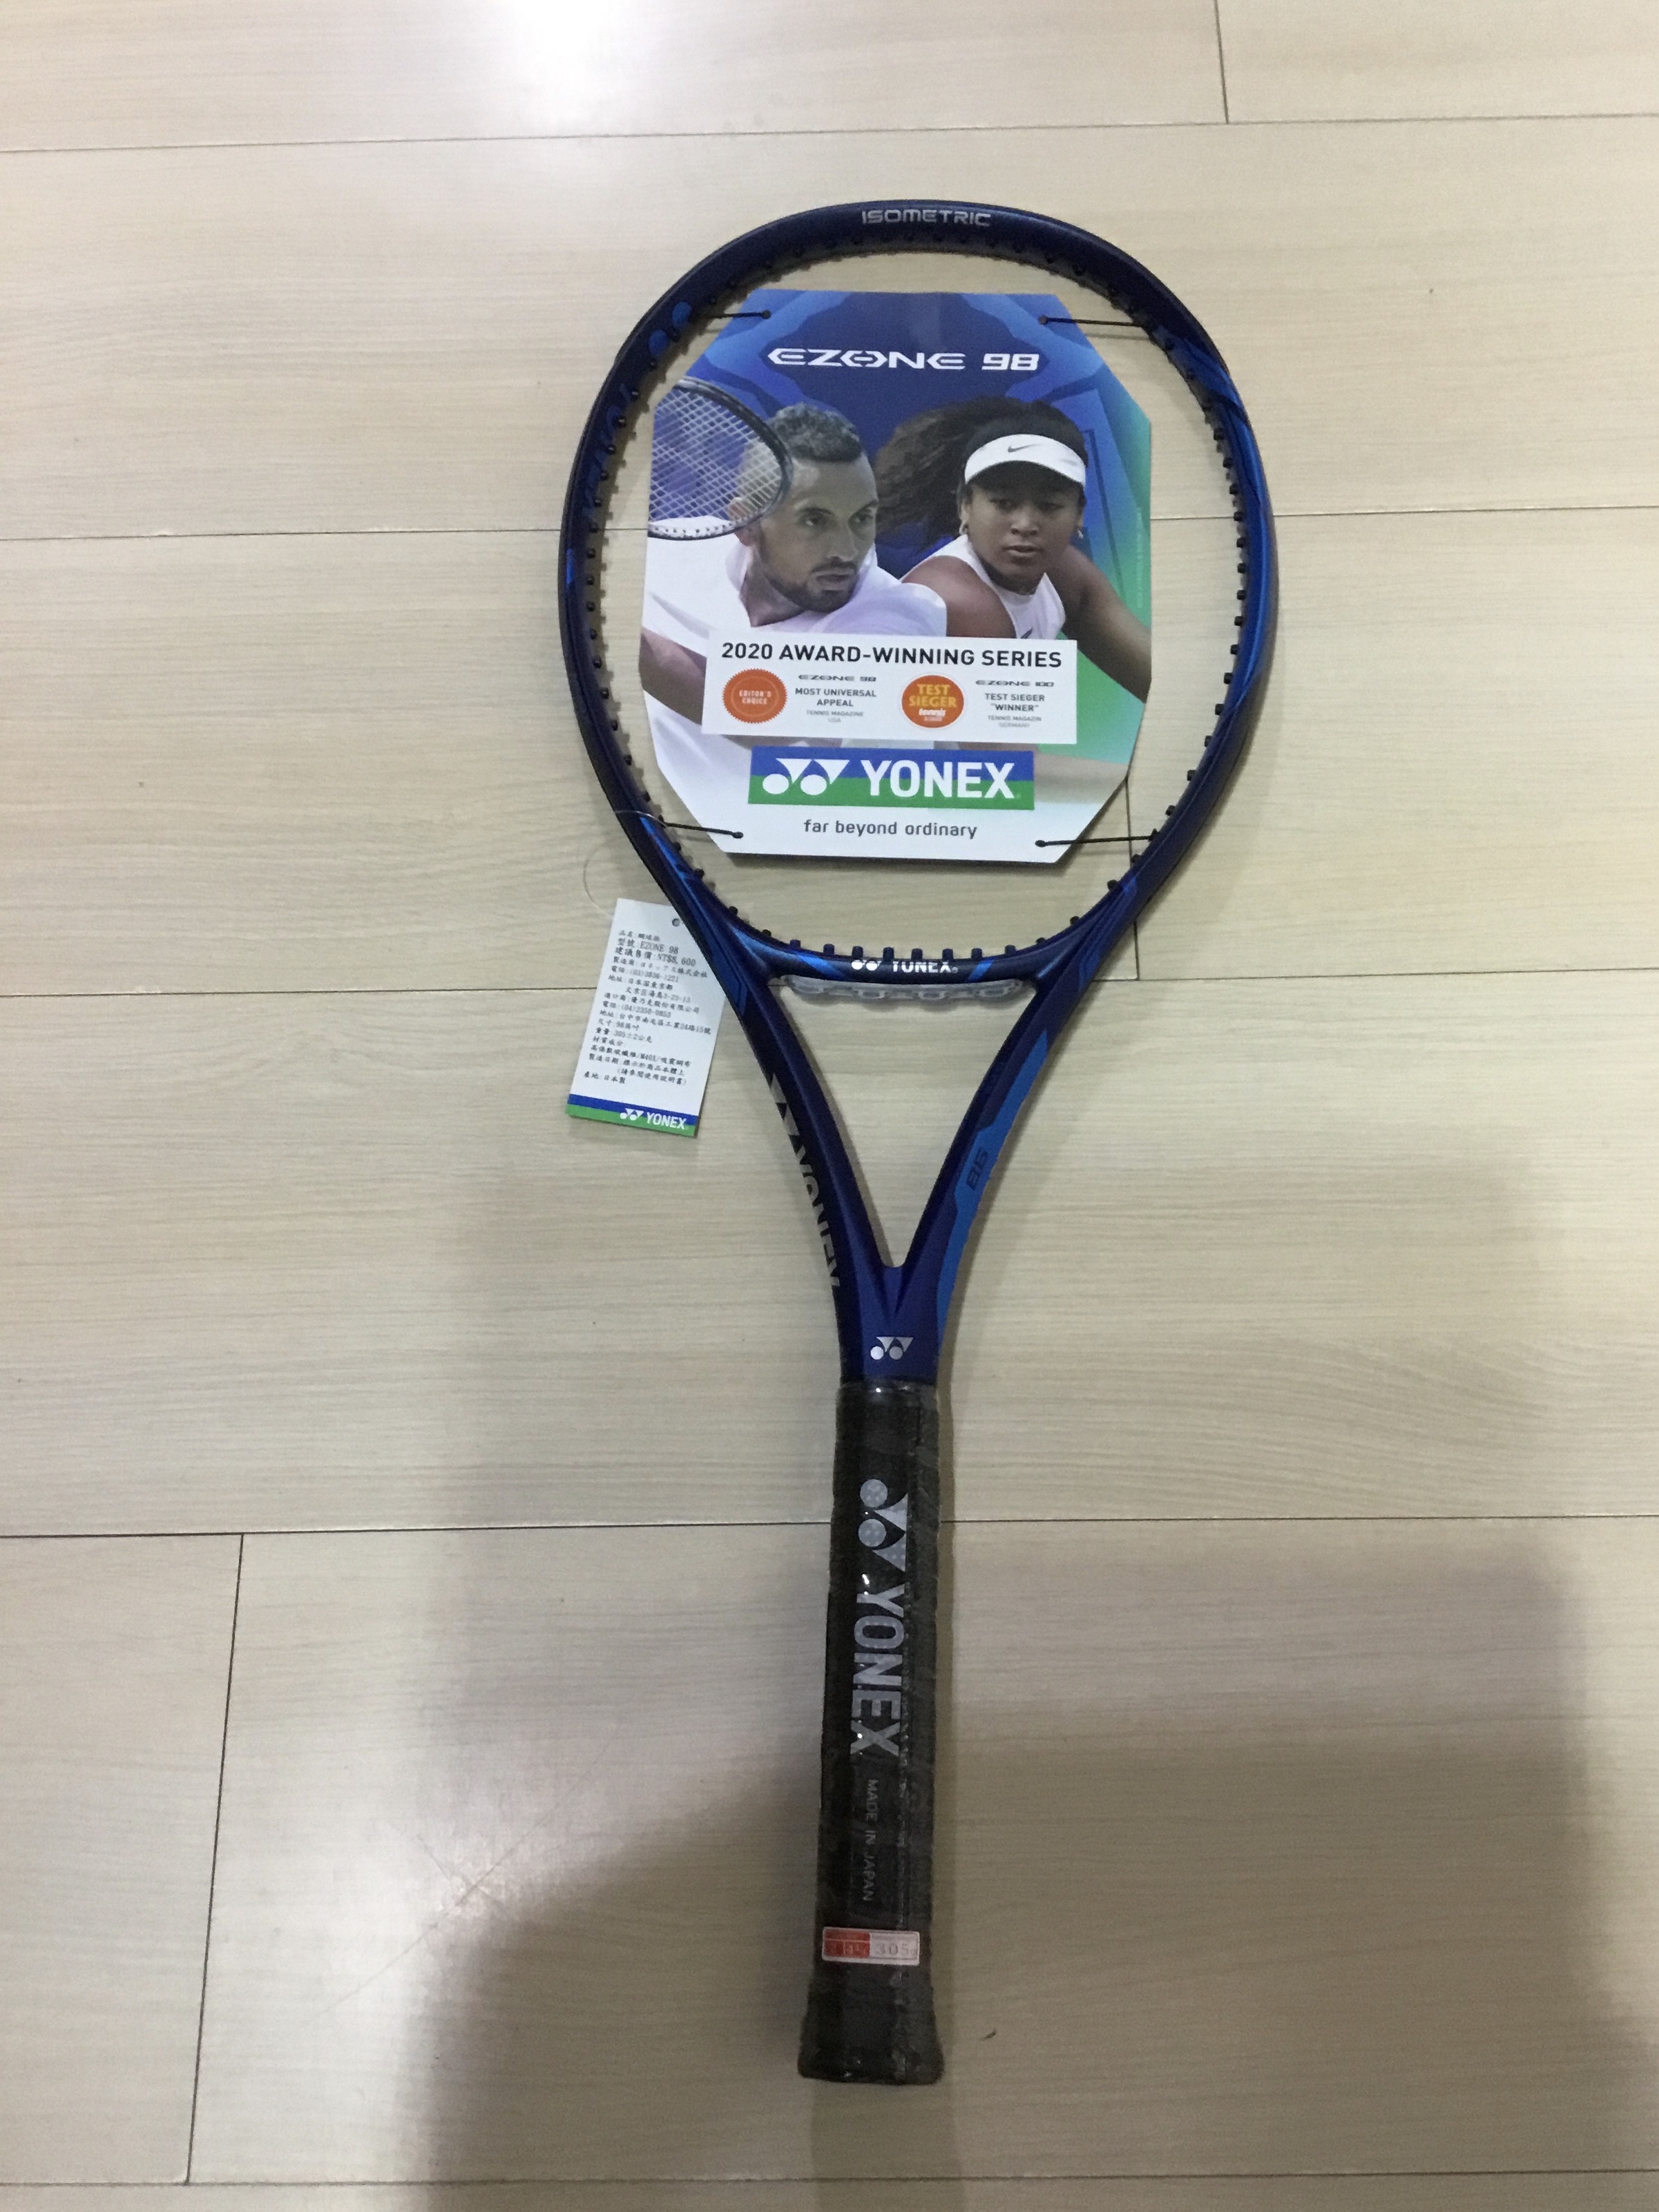 2020 Yonex EZONE 98 專業網球拍| 謹瑋運動用品直營店| 樂天市場Rakuten